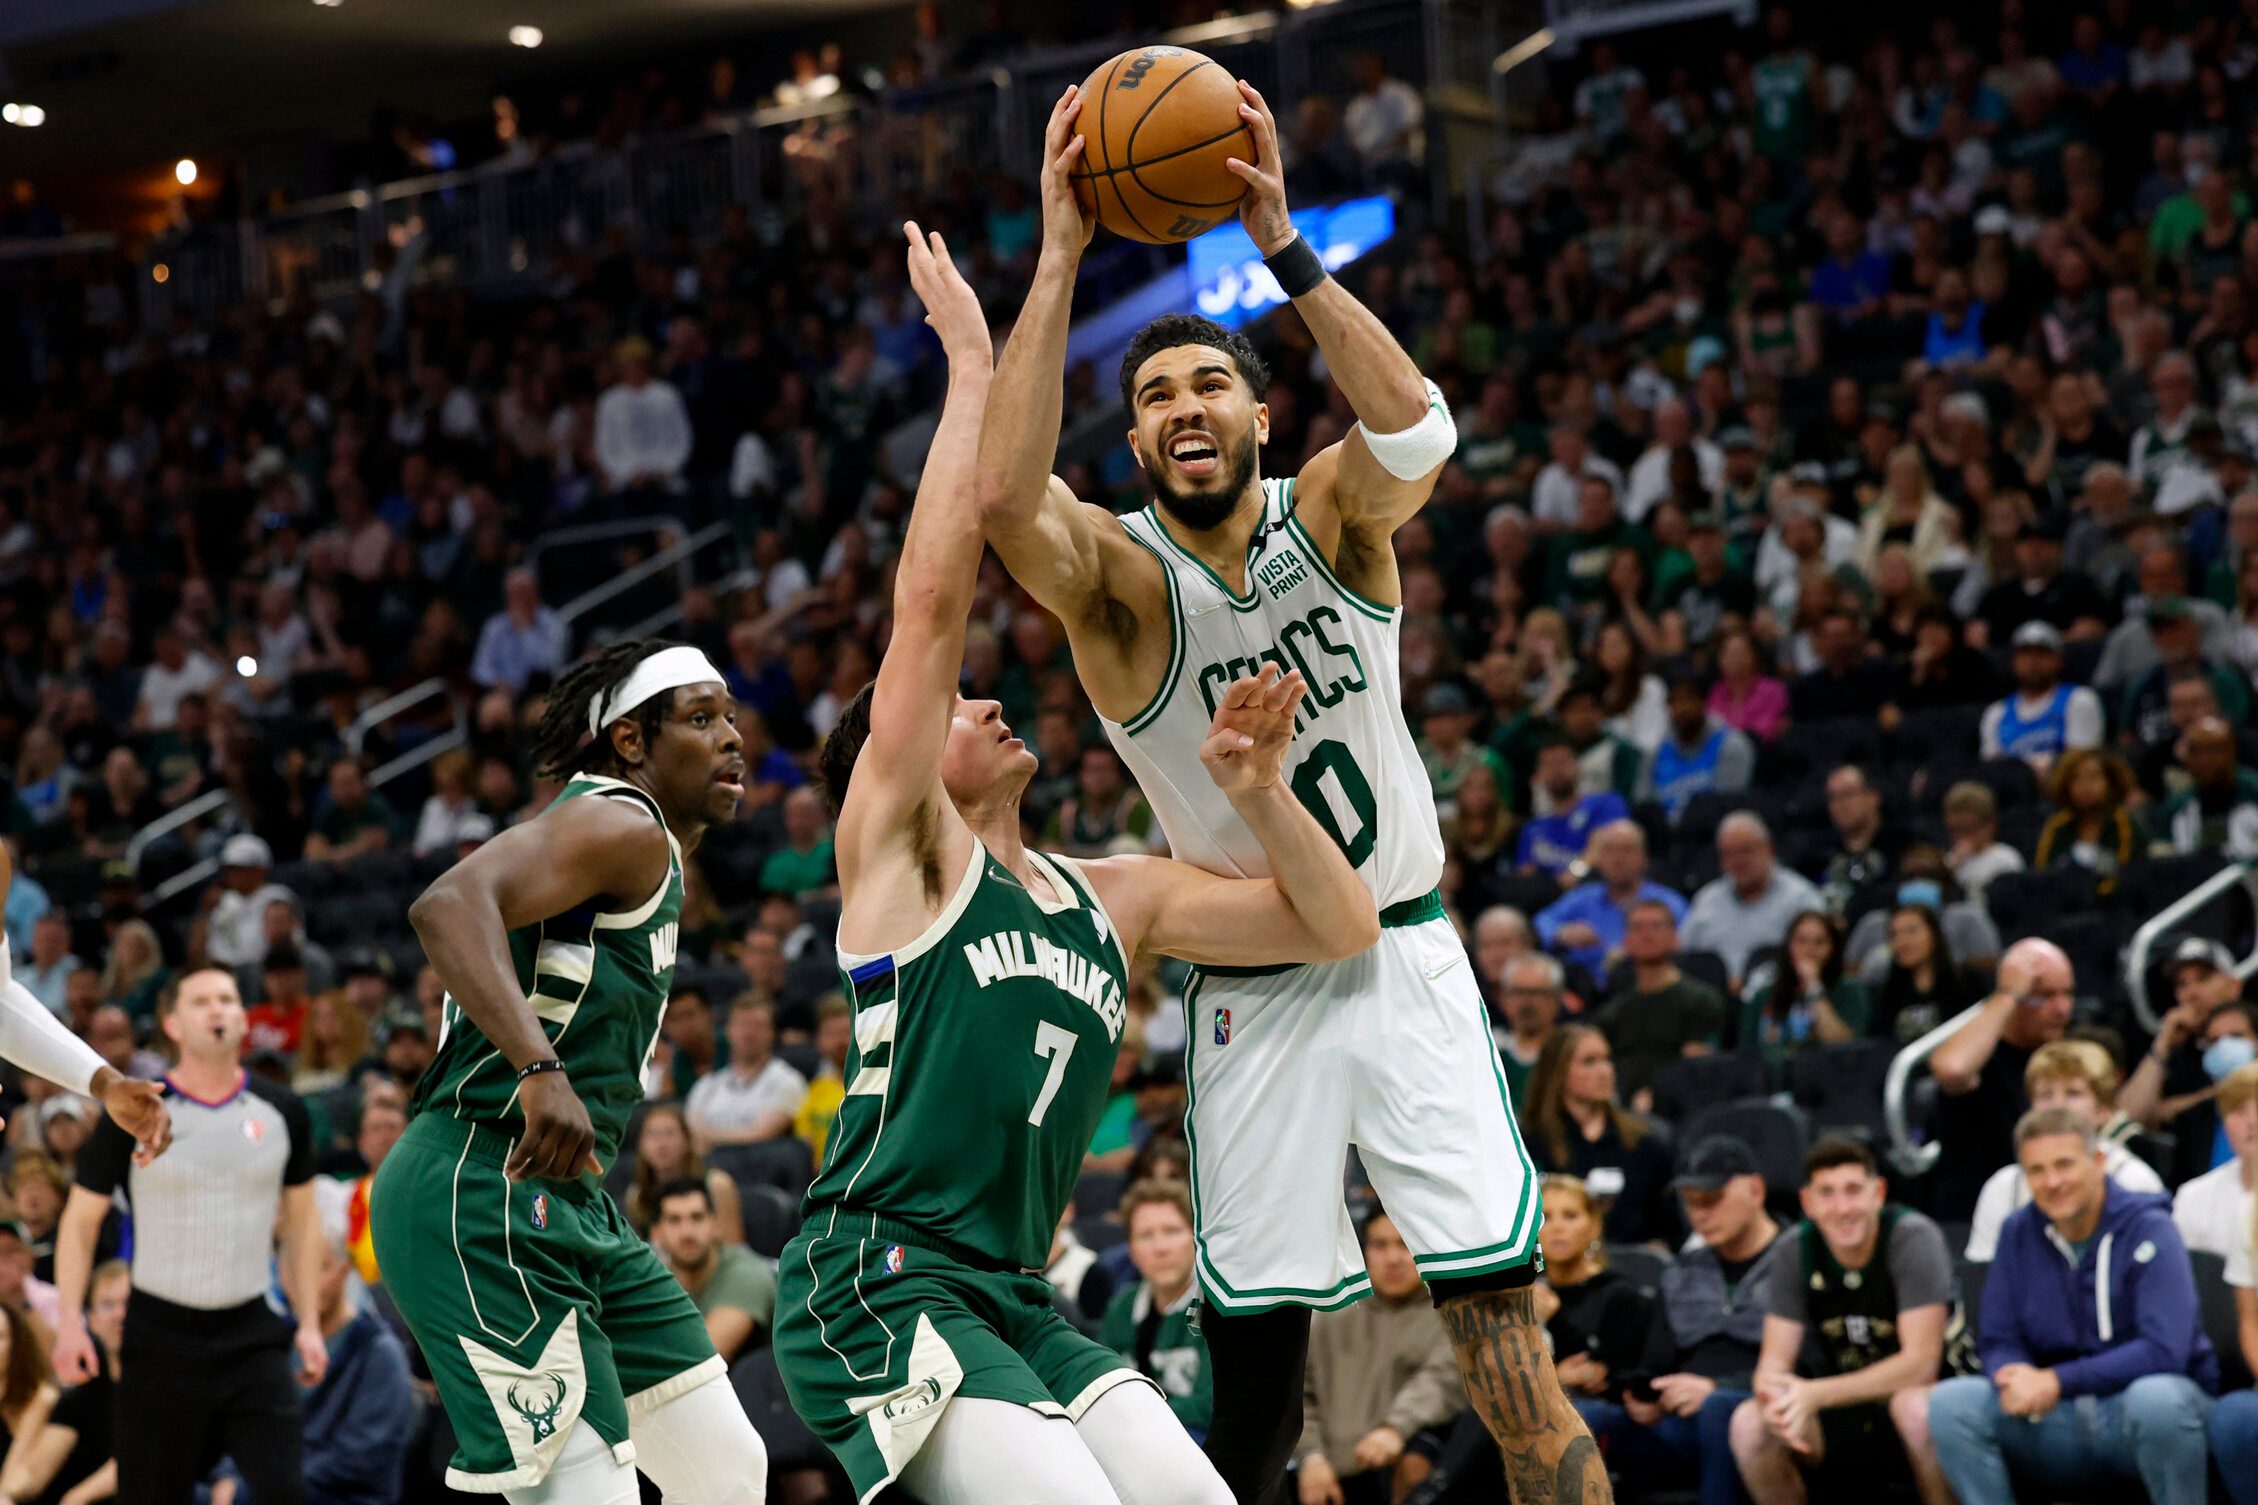 Jayson Tatum nets 46, Celtics trip Bucks to force Game 7